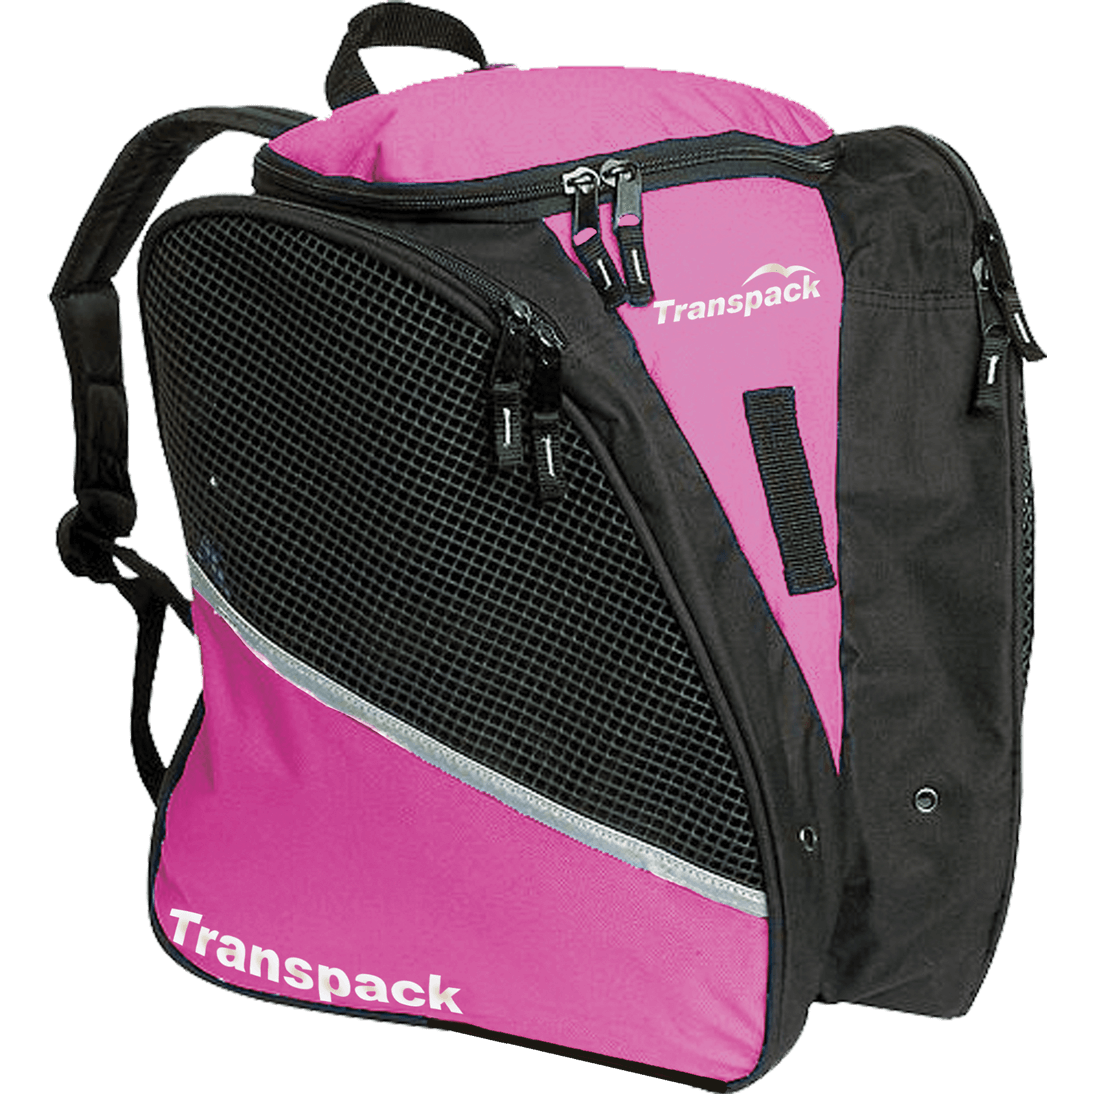 Transpack Bag - Solid